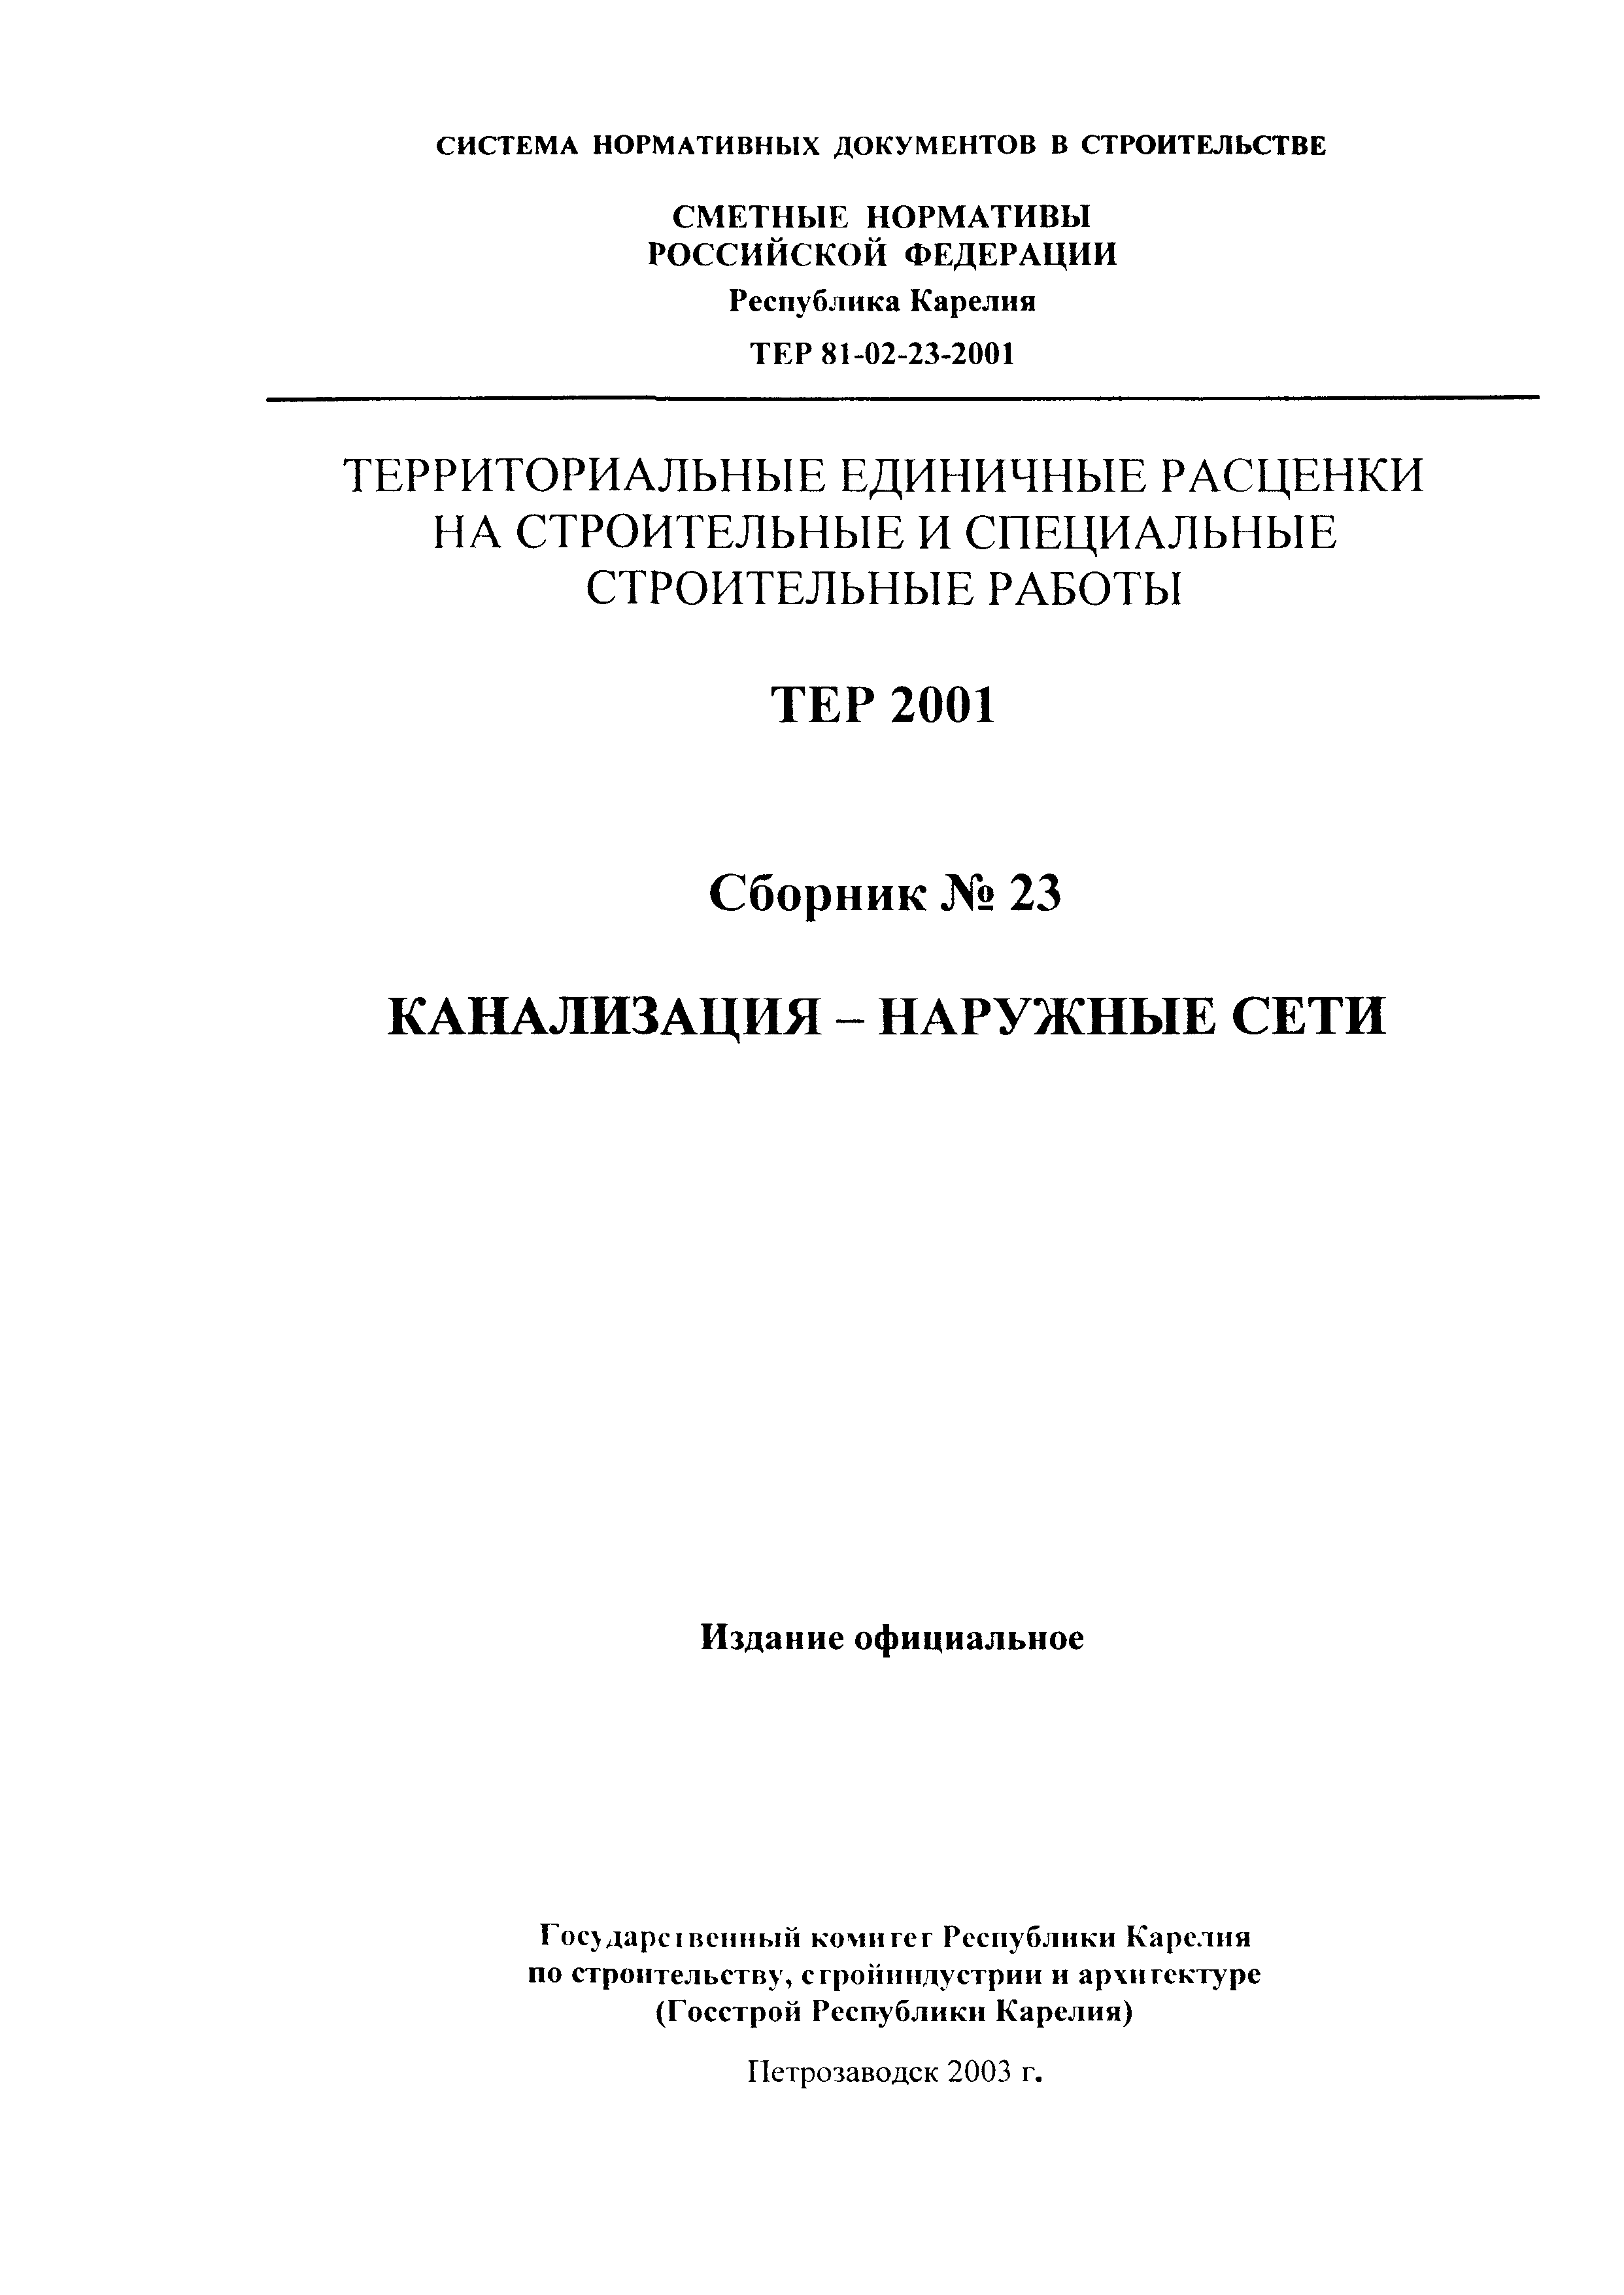 ТЕР Республика Карелия 2001-23